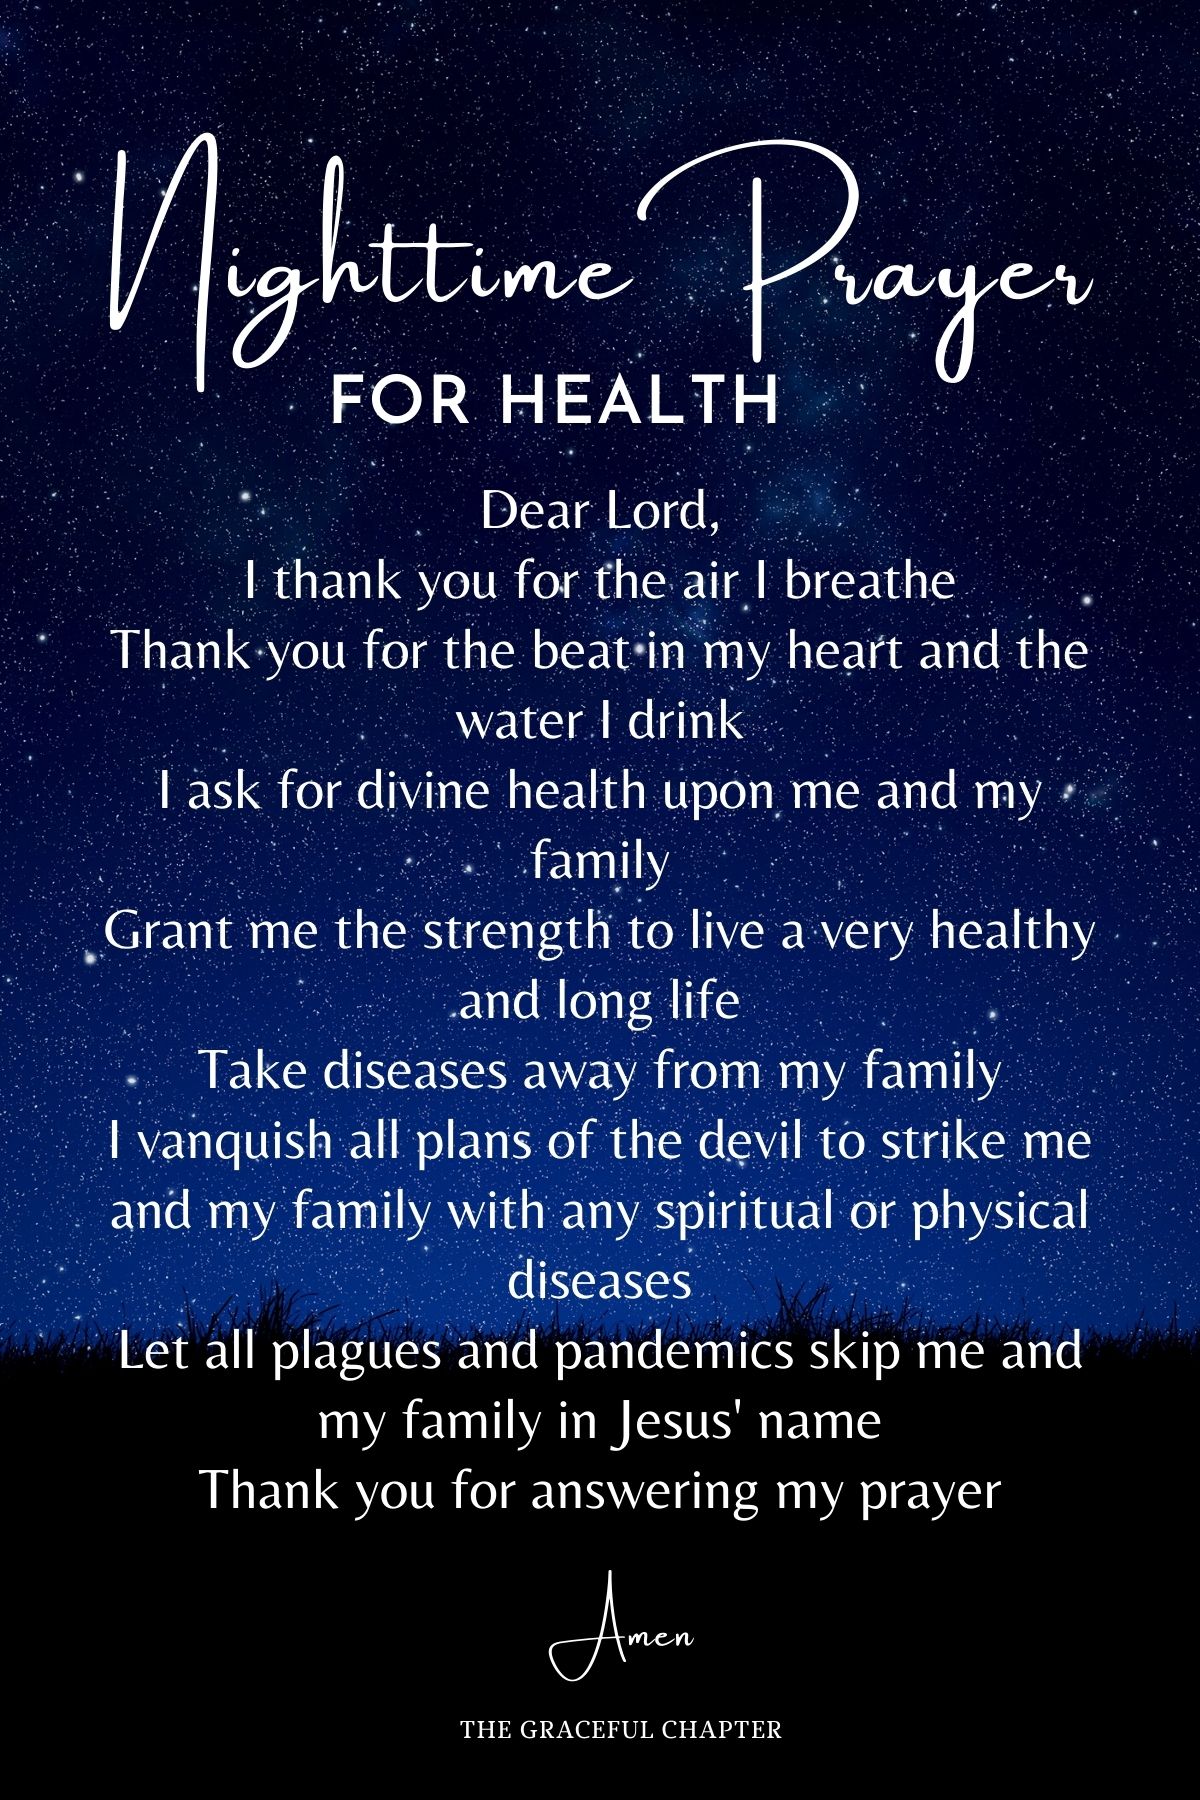 Nighttime prayer for health